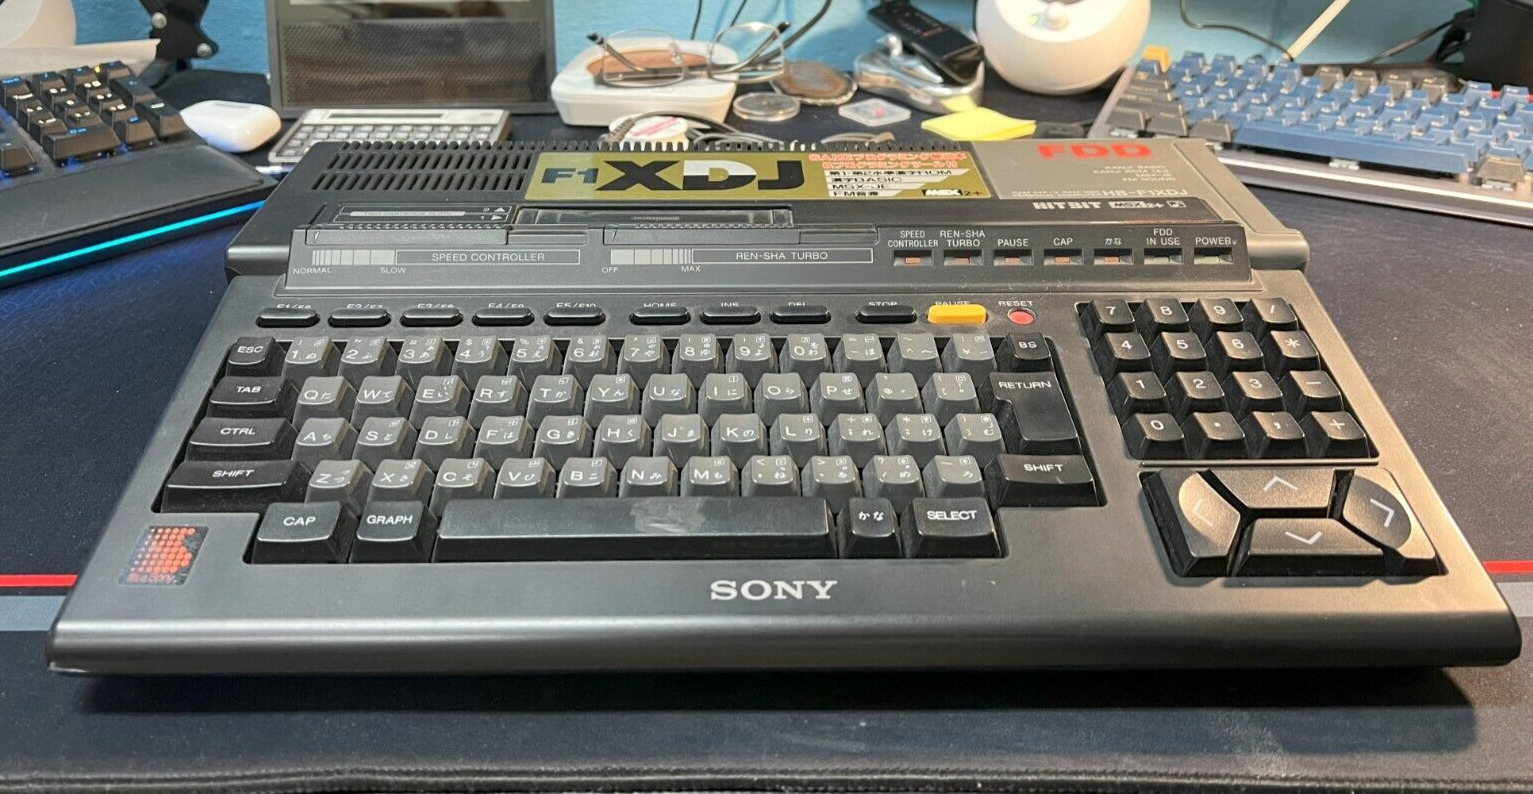 SONY MSX2+ Computer HIT-BIT HB-F1XDJ floppy drive dual cartridge